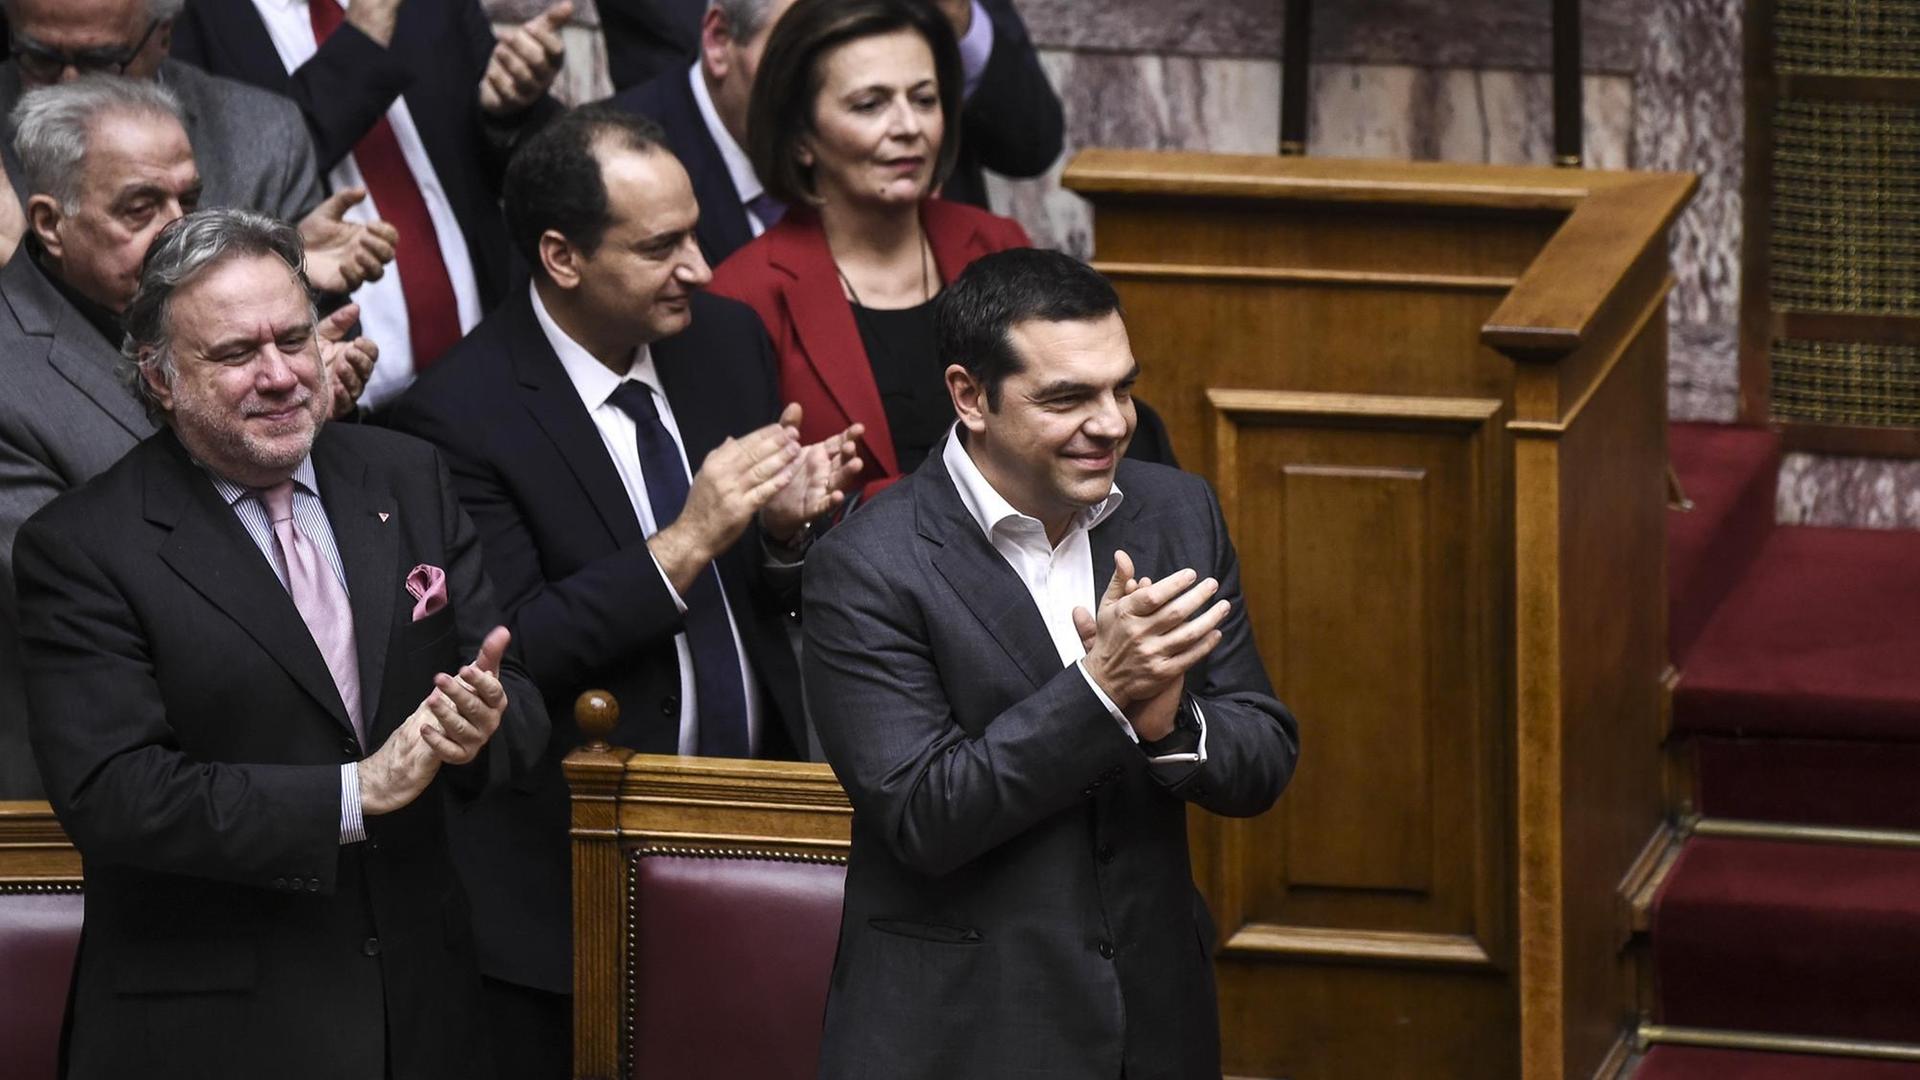 Das Foto zeigt Griechenlands Regierungs-Chef Alexis Tsipras im Parlament. Er klatscht.